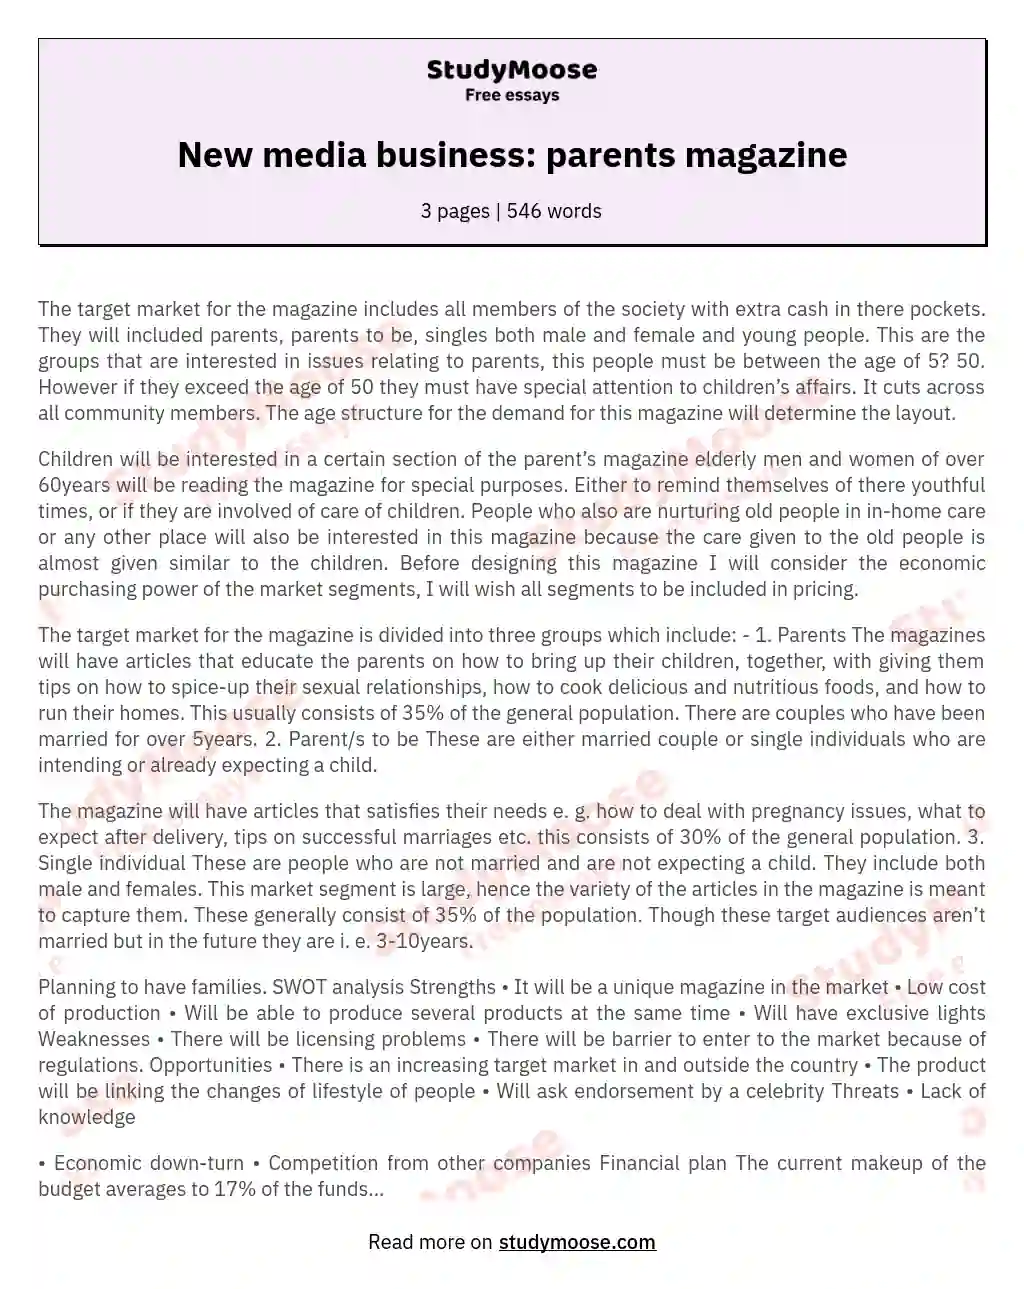 New media business: parents magazine essay